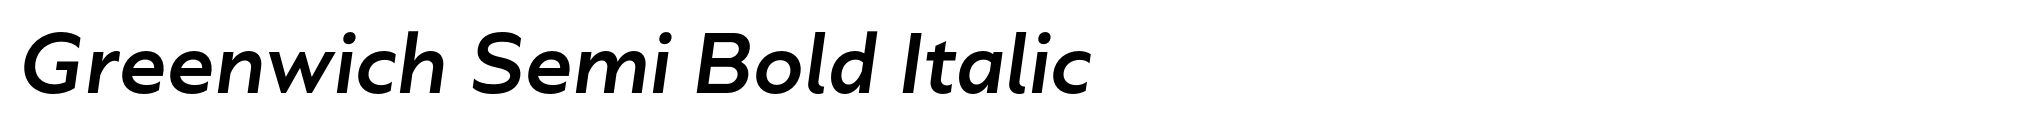 Greenwich Semi Bold Italic image